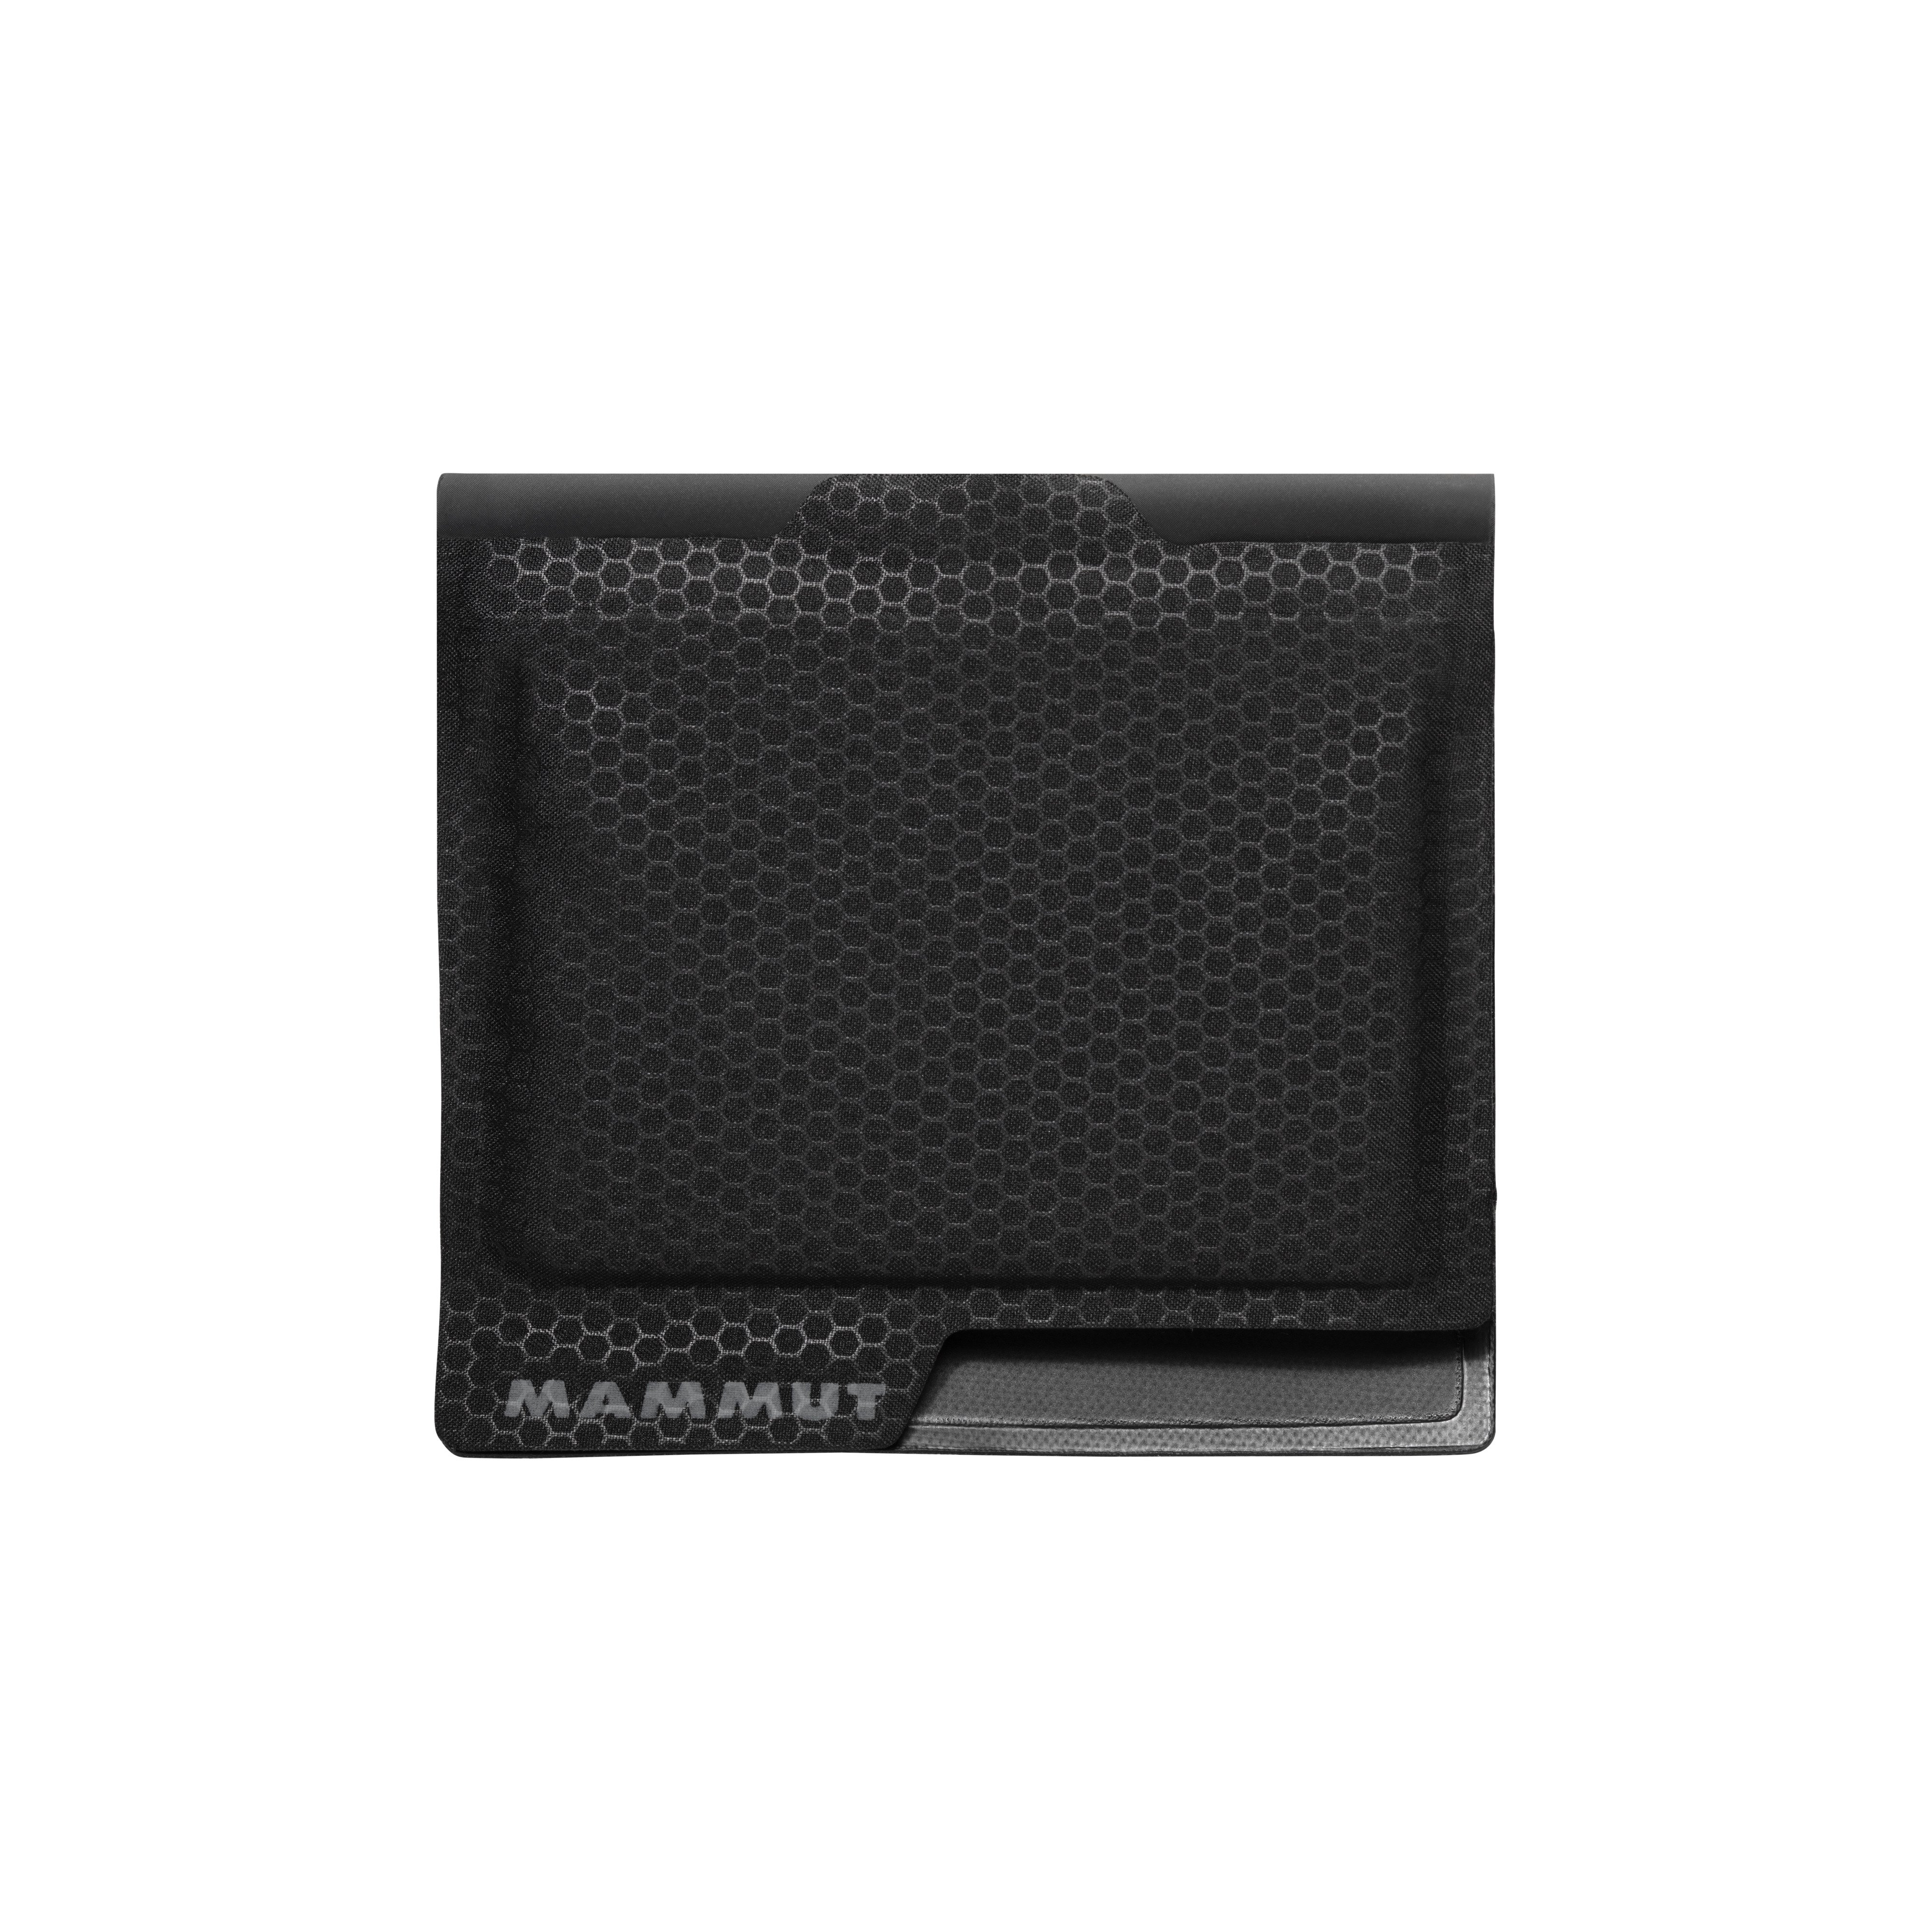 Smart Wallet Light - black, one size product image